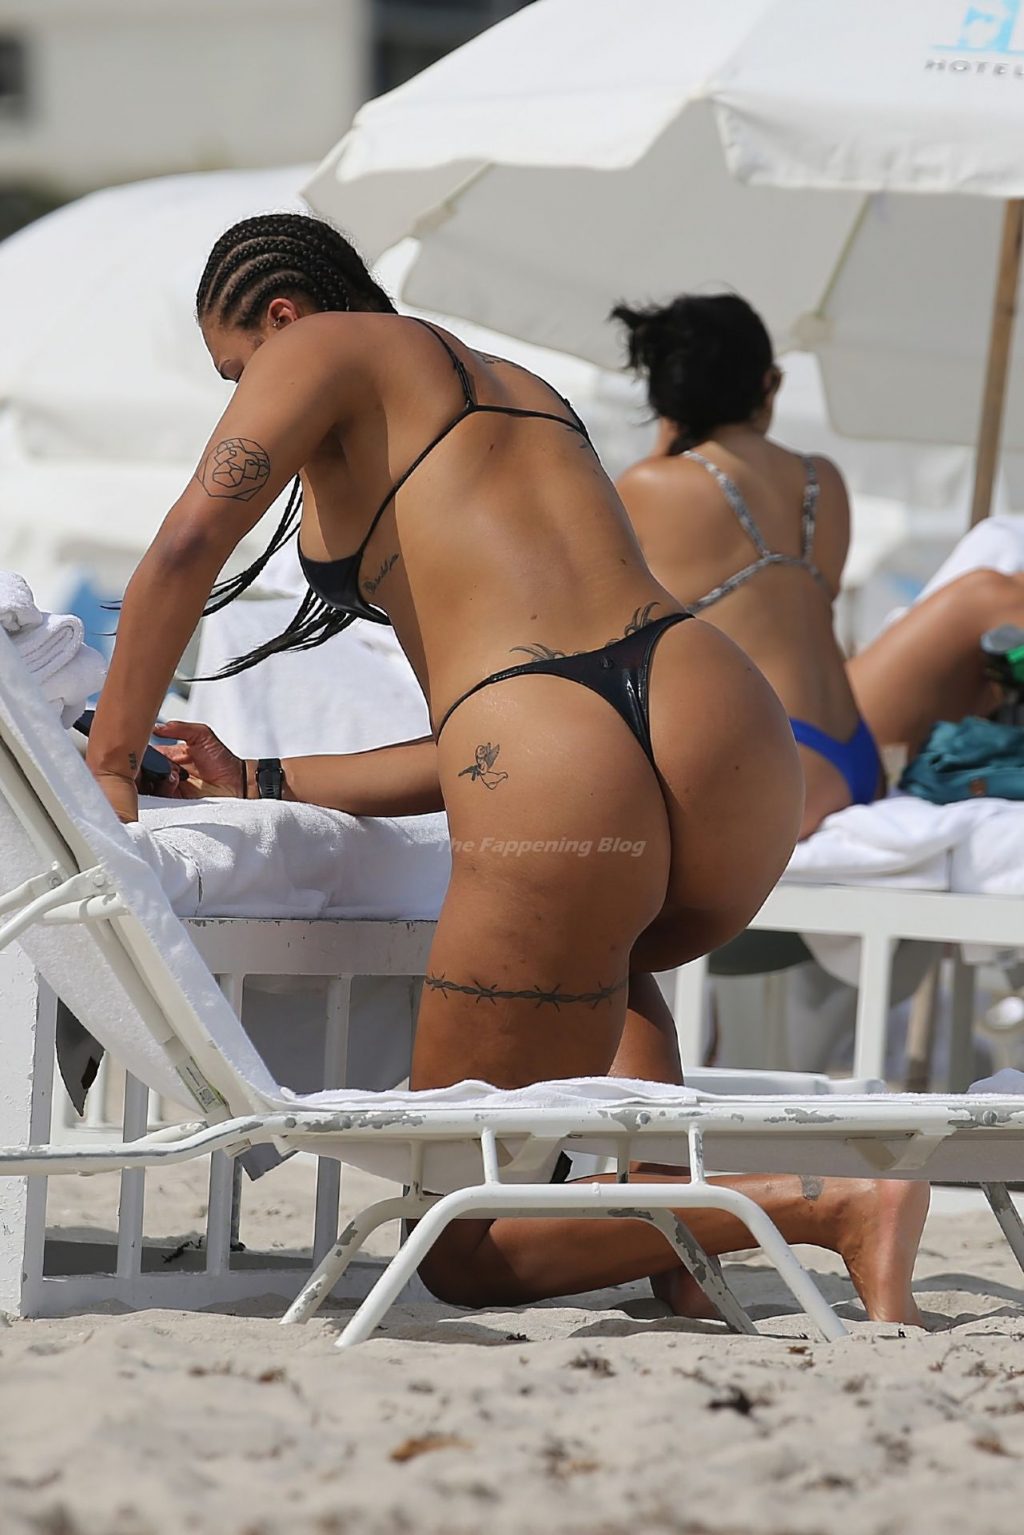 Liz Cambage Shows Off Body in a Tiny Black Bikini On the Beach in Miami (51 Photos)